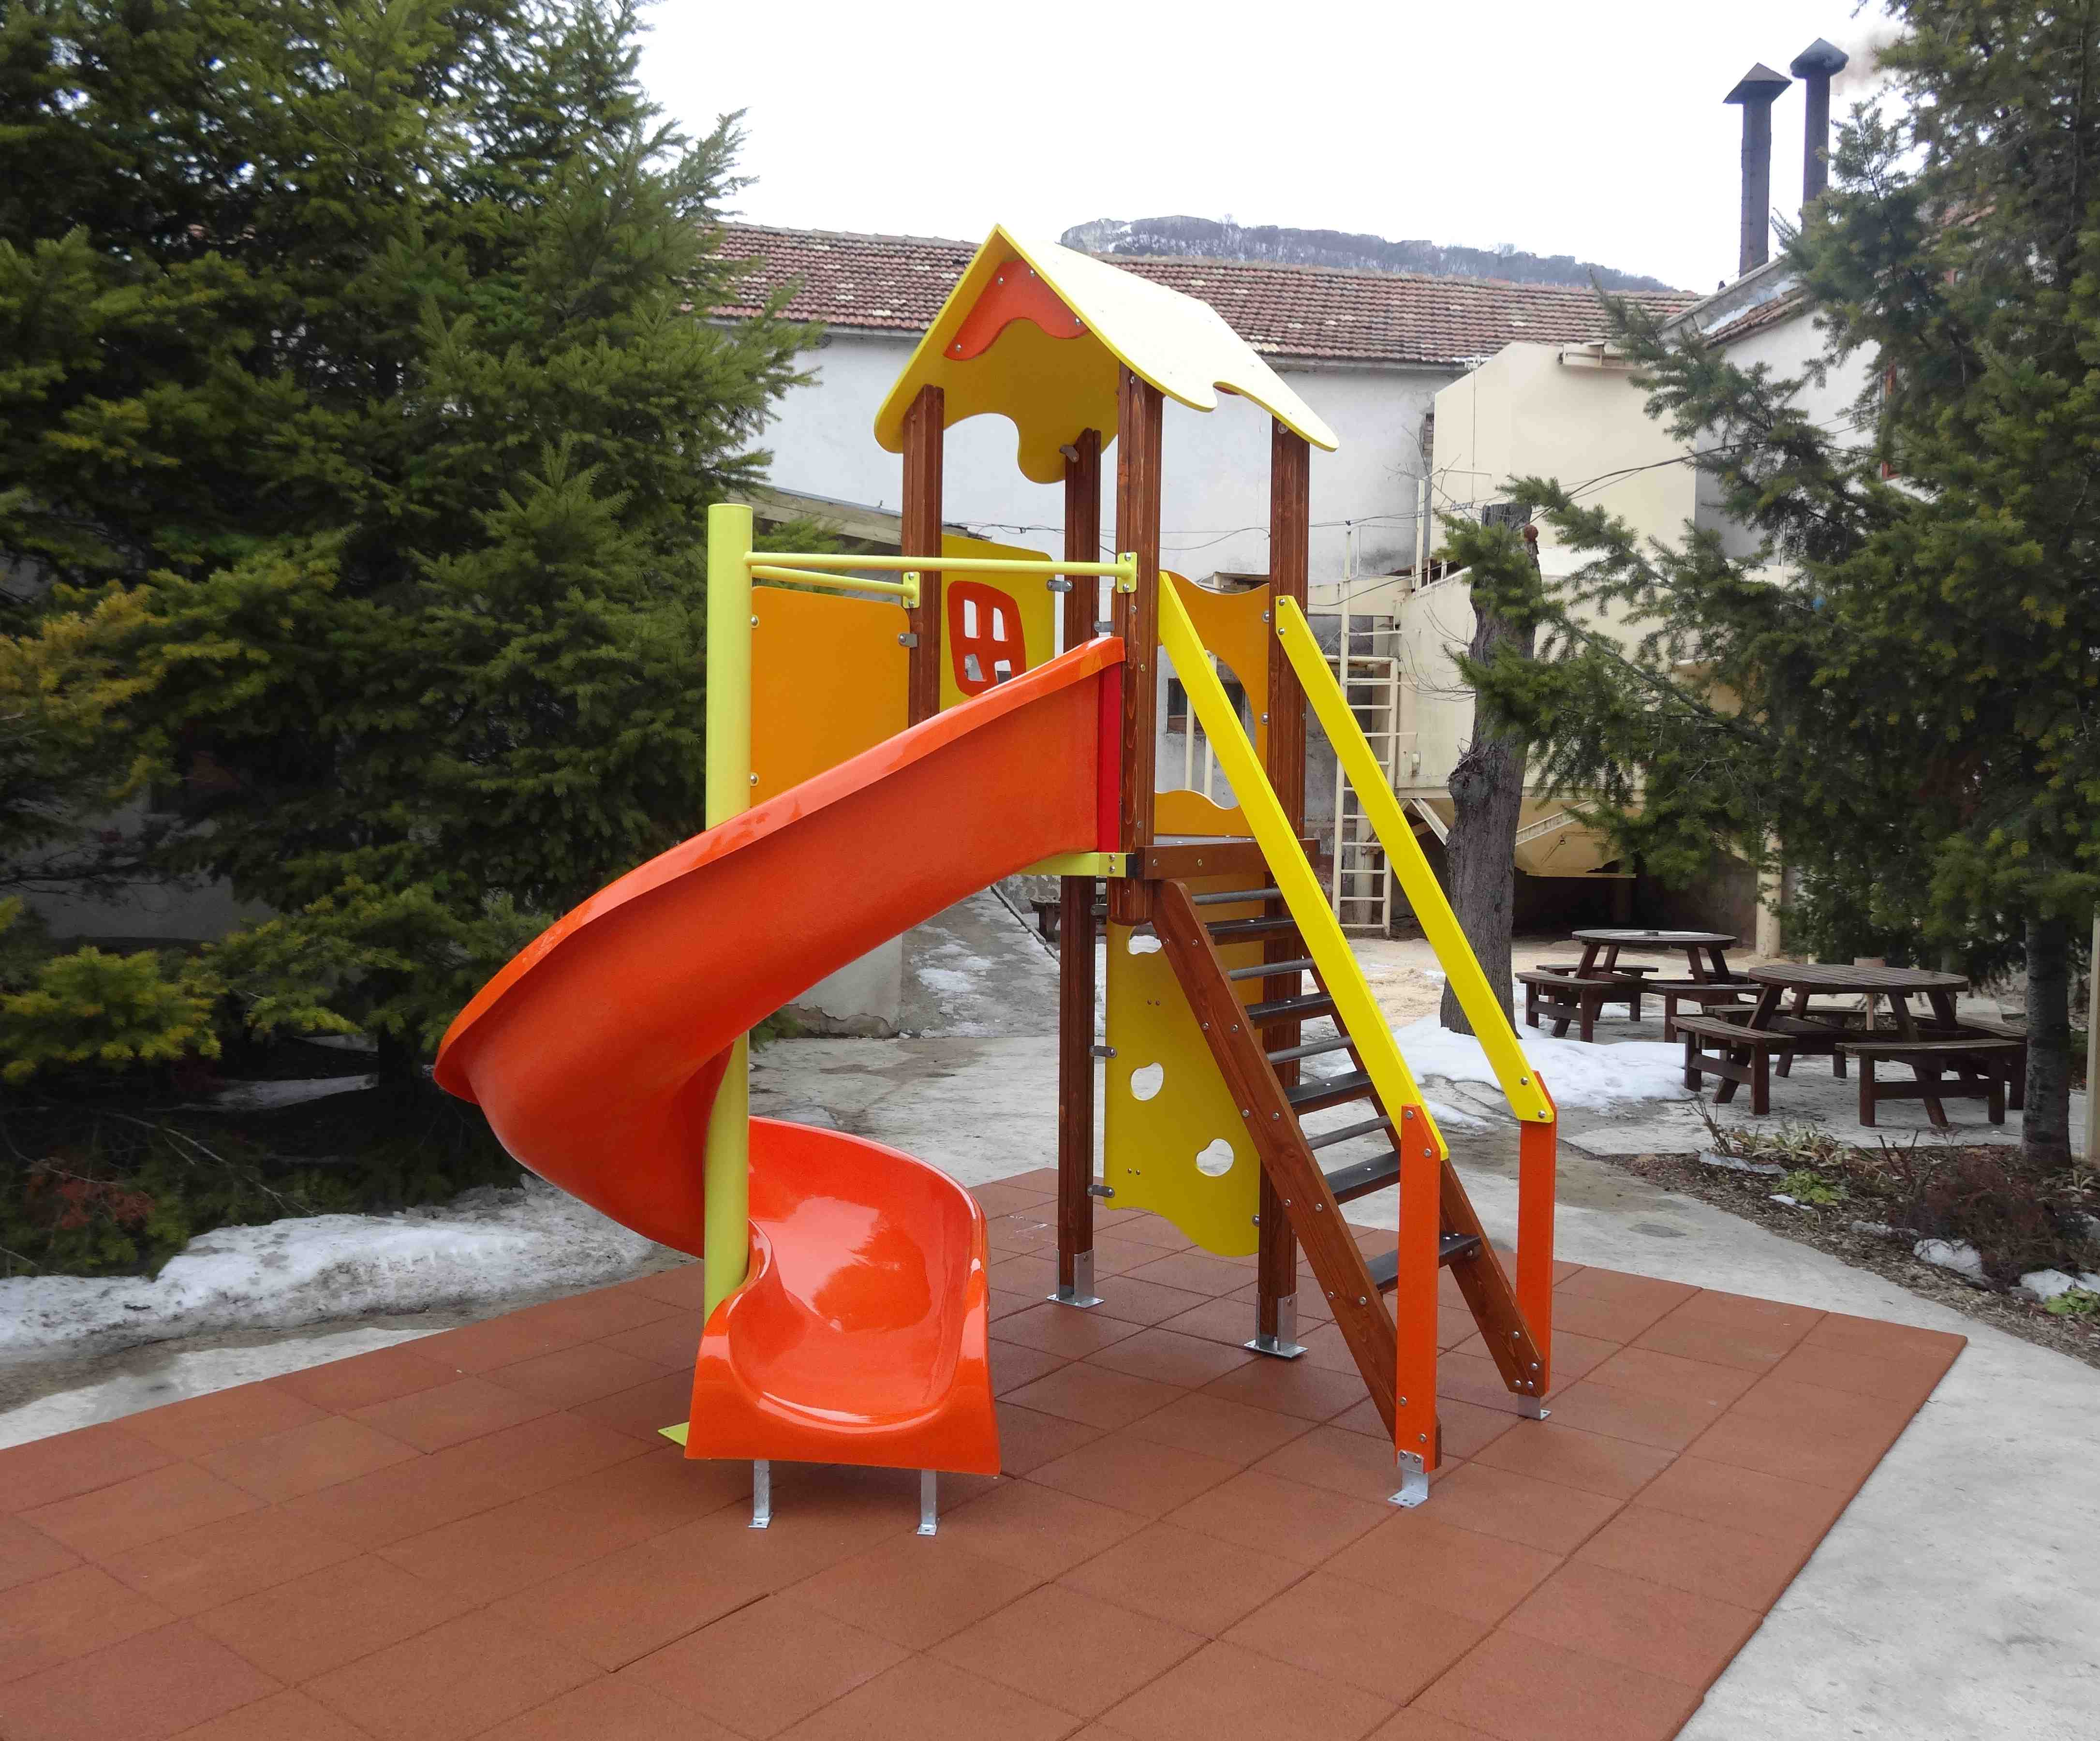 Combined playground equipment, model КД10